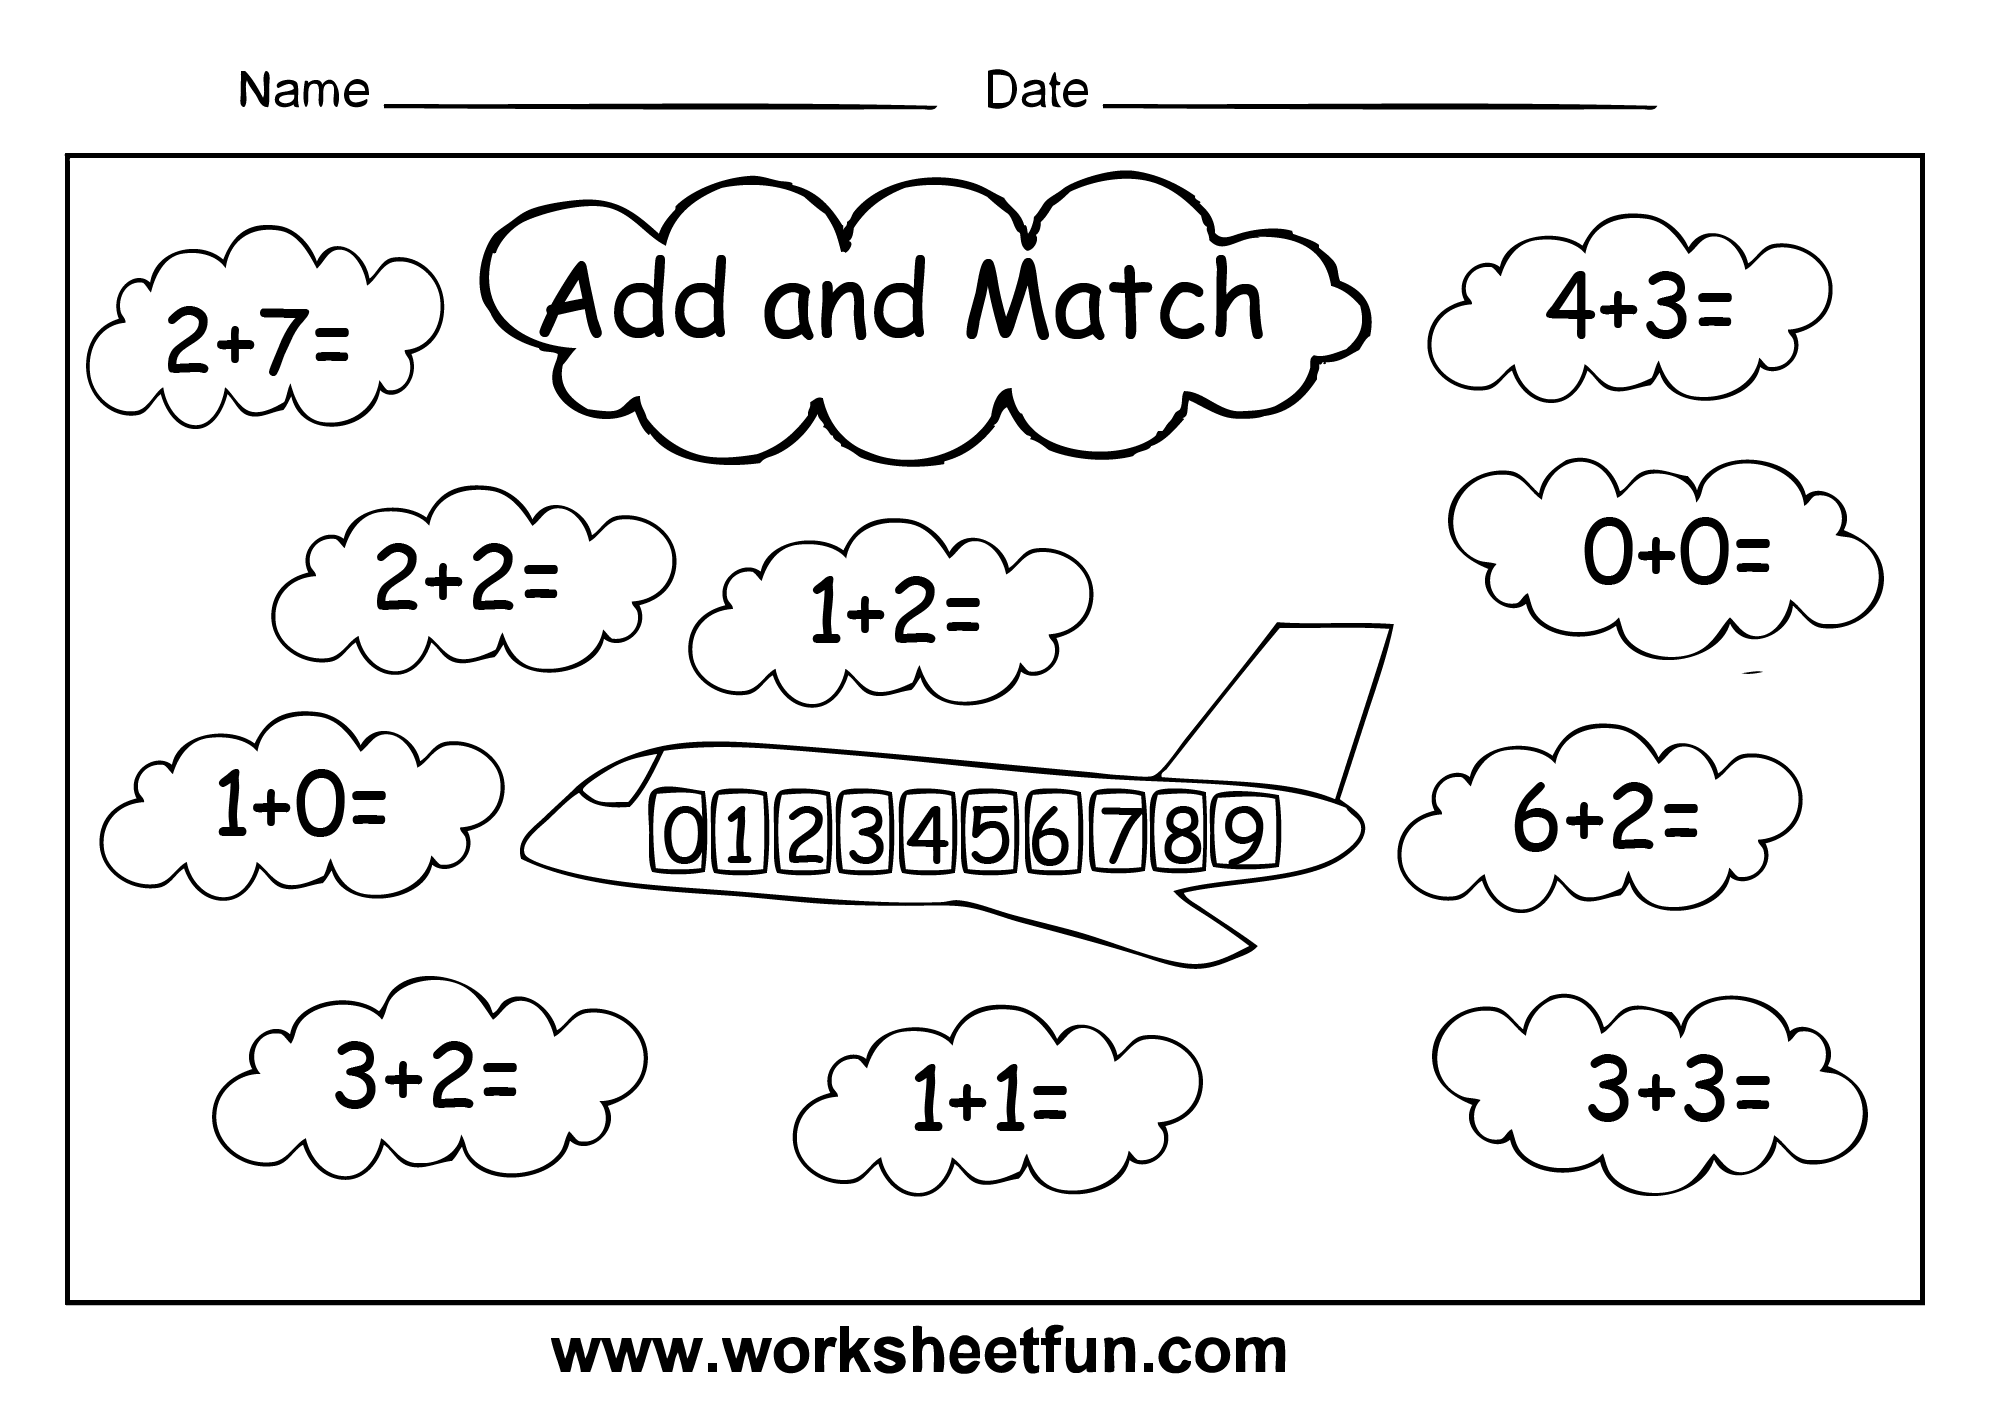 basic-addition-facts-1-12-worksheet-free-printable-worksheets-hot-sex